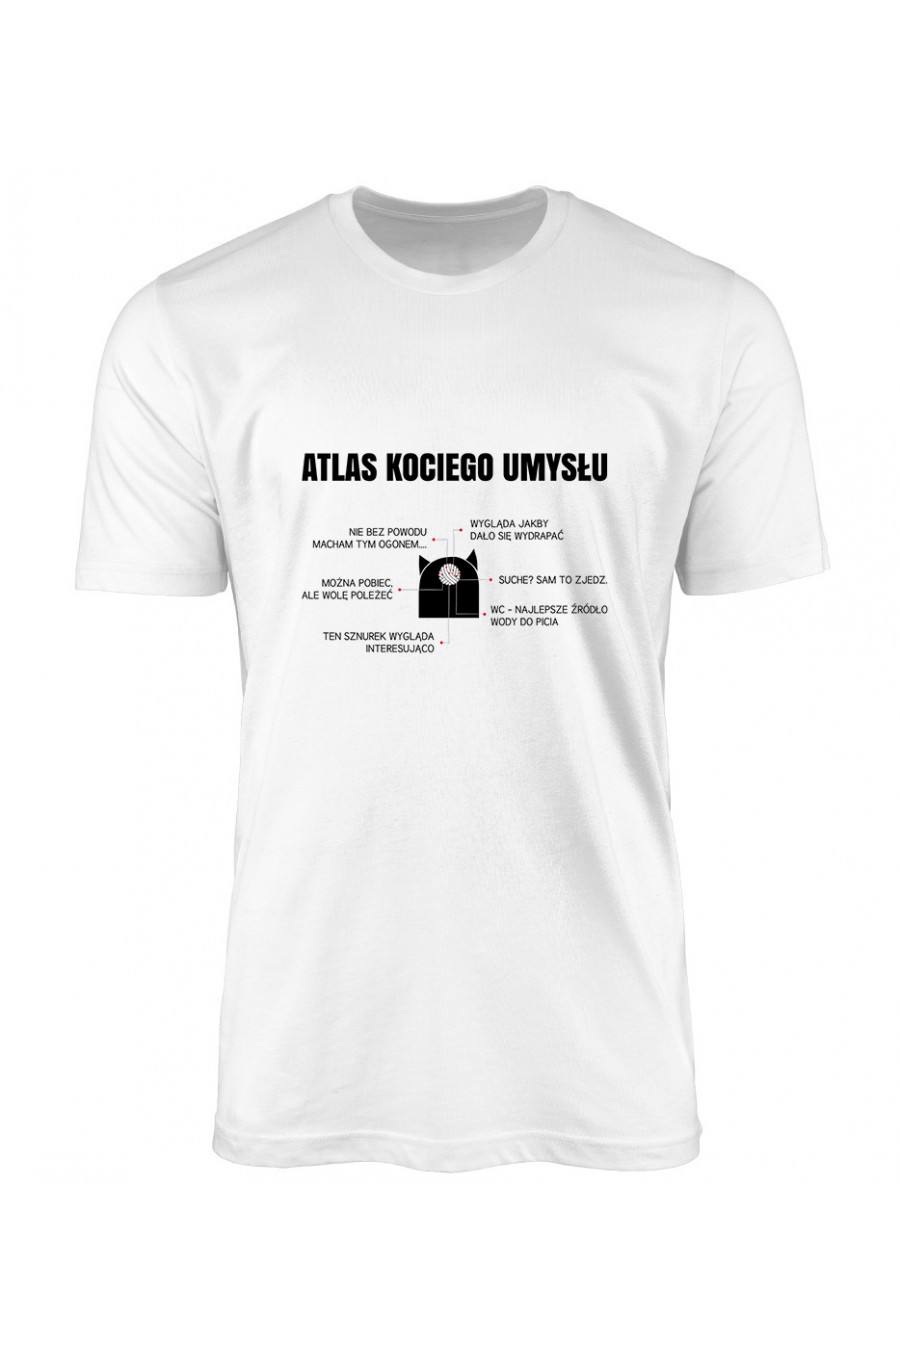 Koszulka Męska Atlas Kociego Umysłu